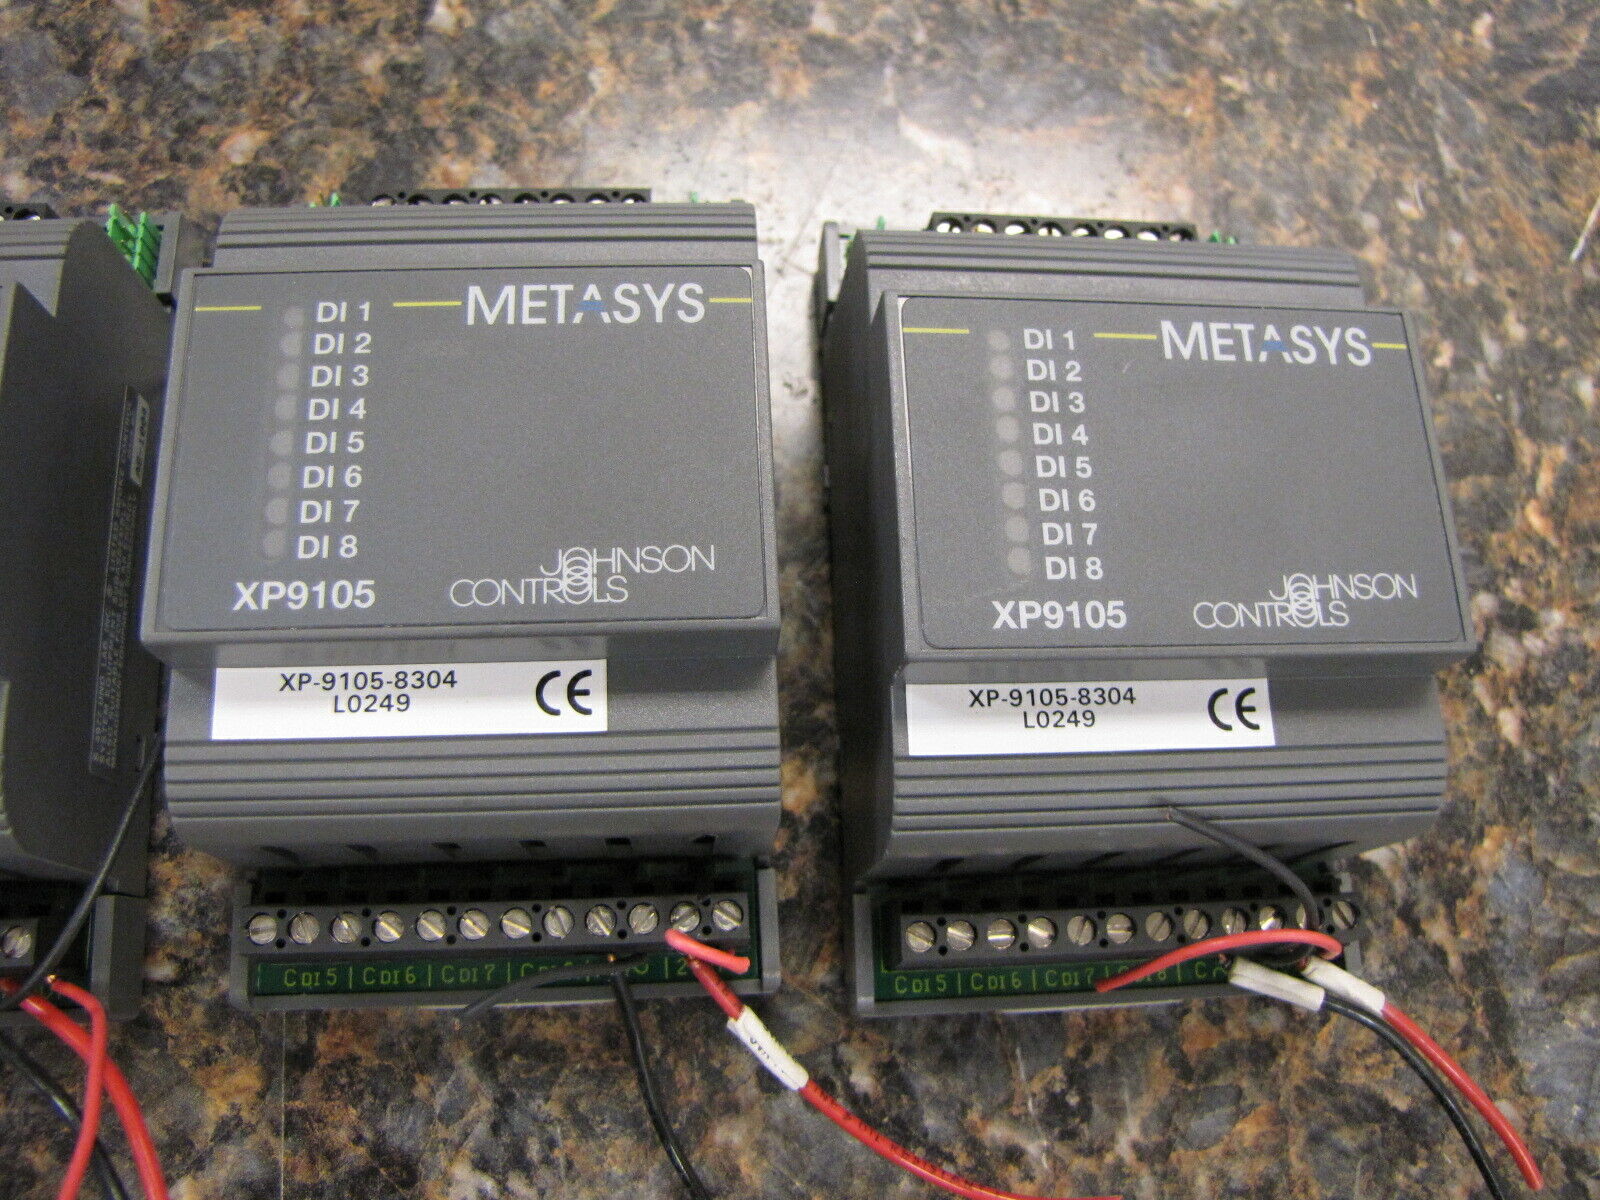 Lot of (2) METASYS Johnson Controls XP9105 XP-9105-8304 Extension modules Qty